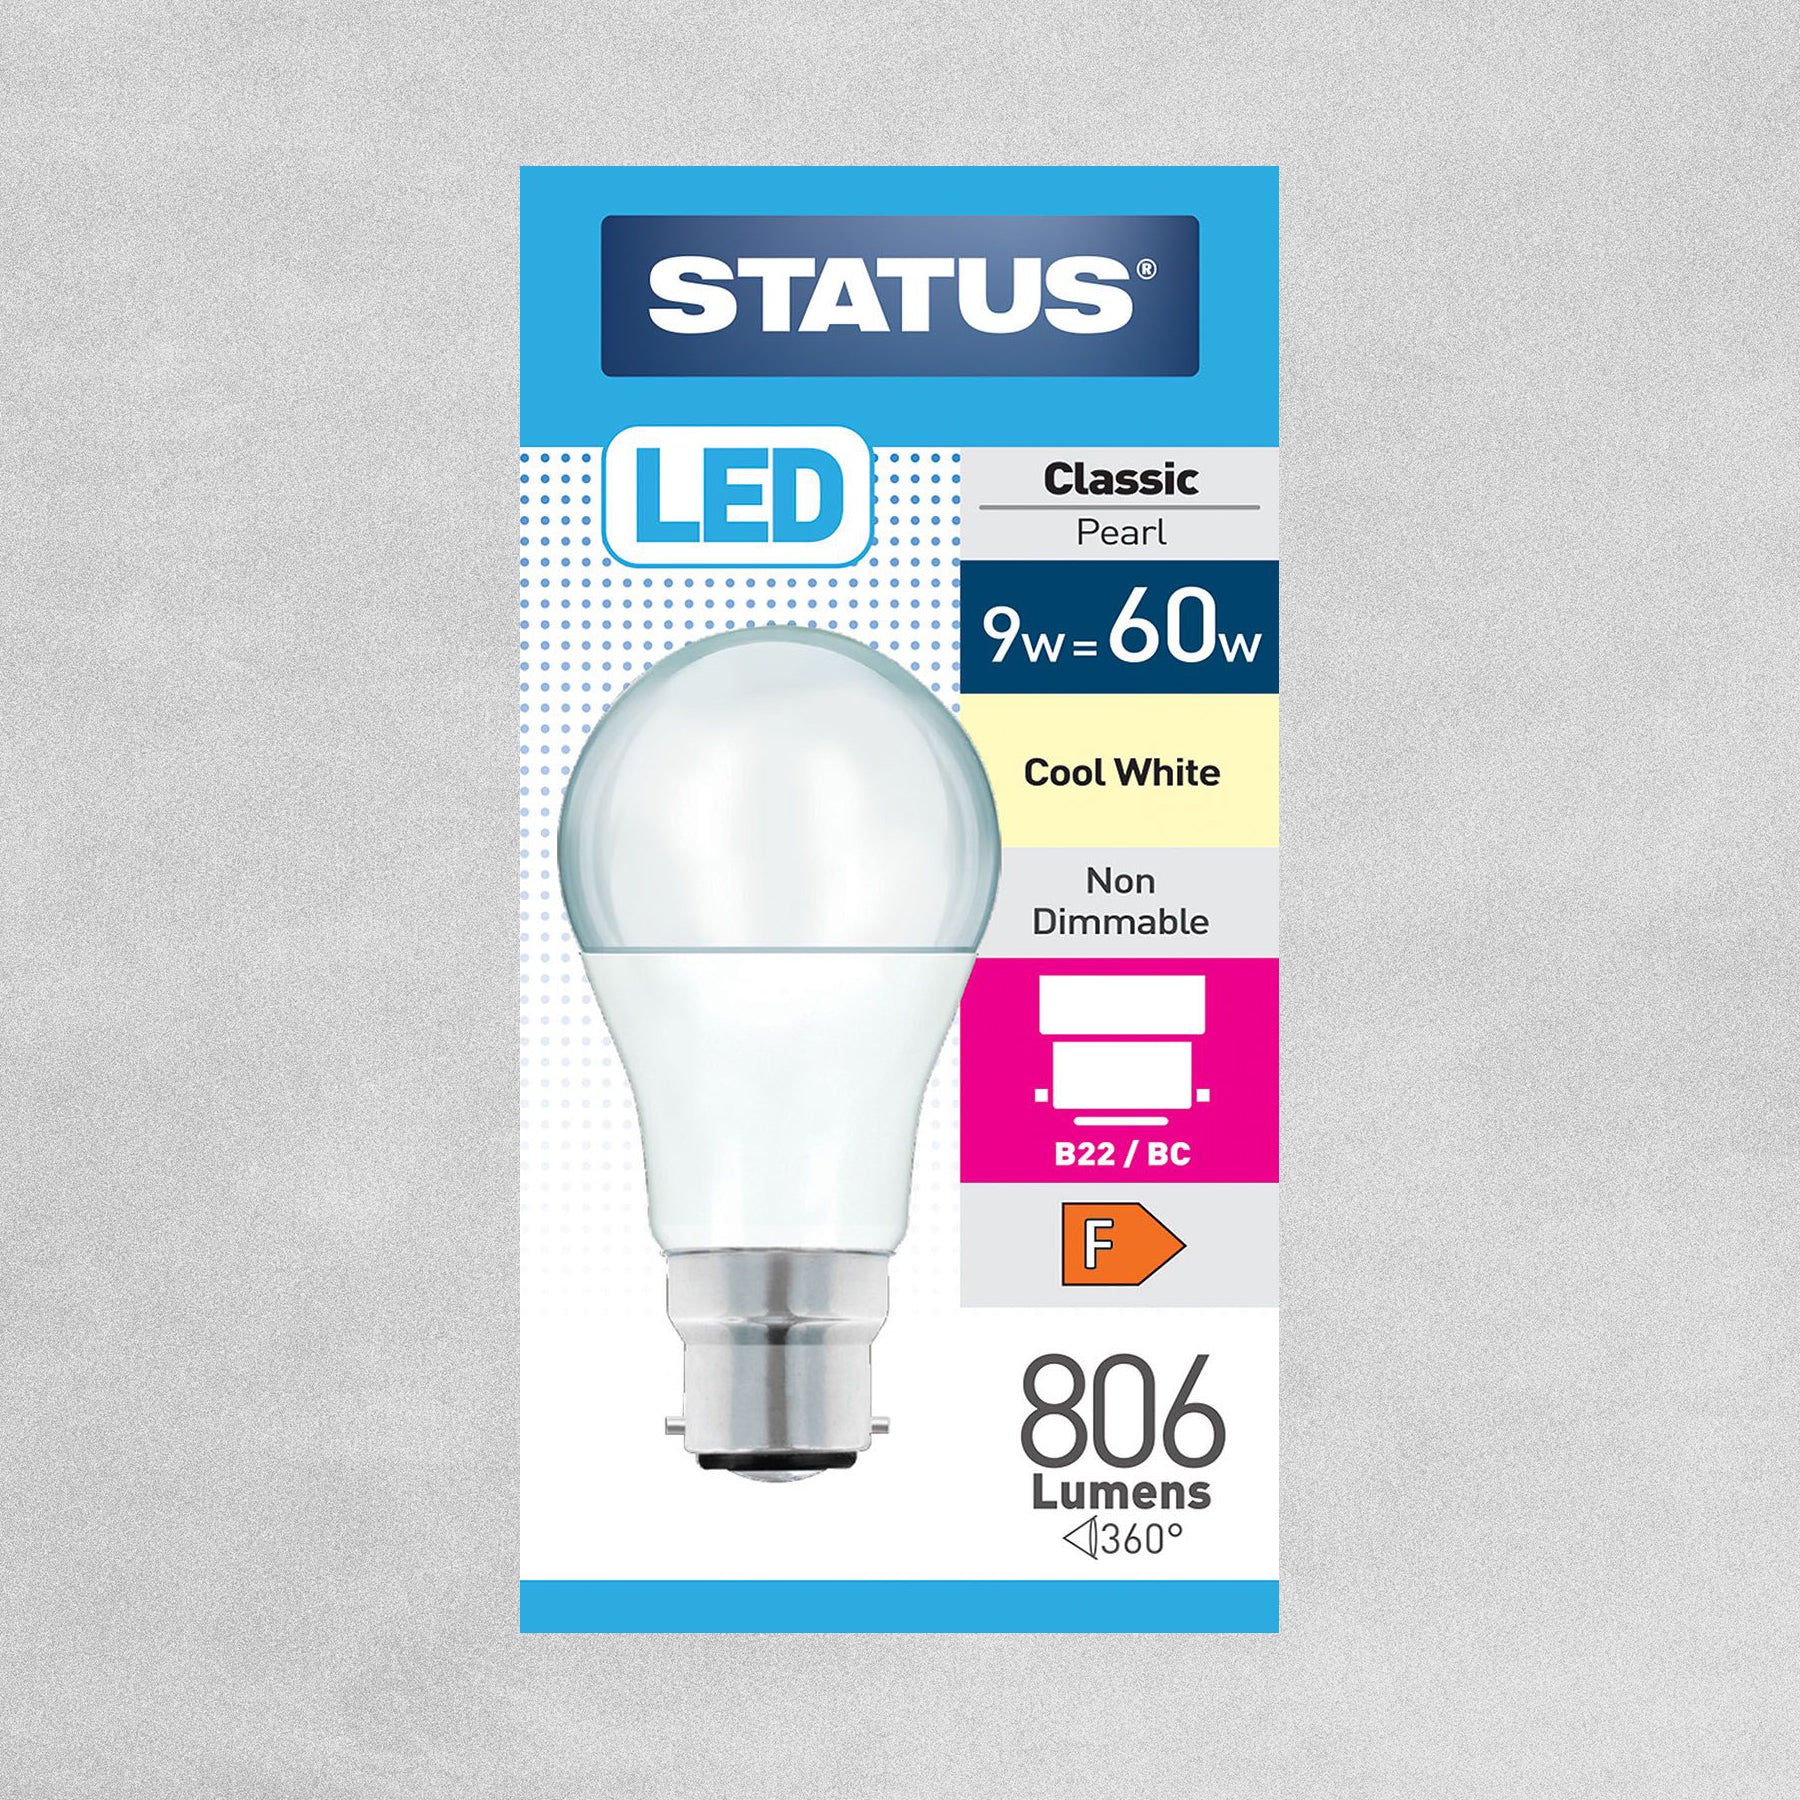 Status LED Classic Pearl Bulb B22/BC 9w=60w - Cool White